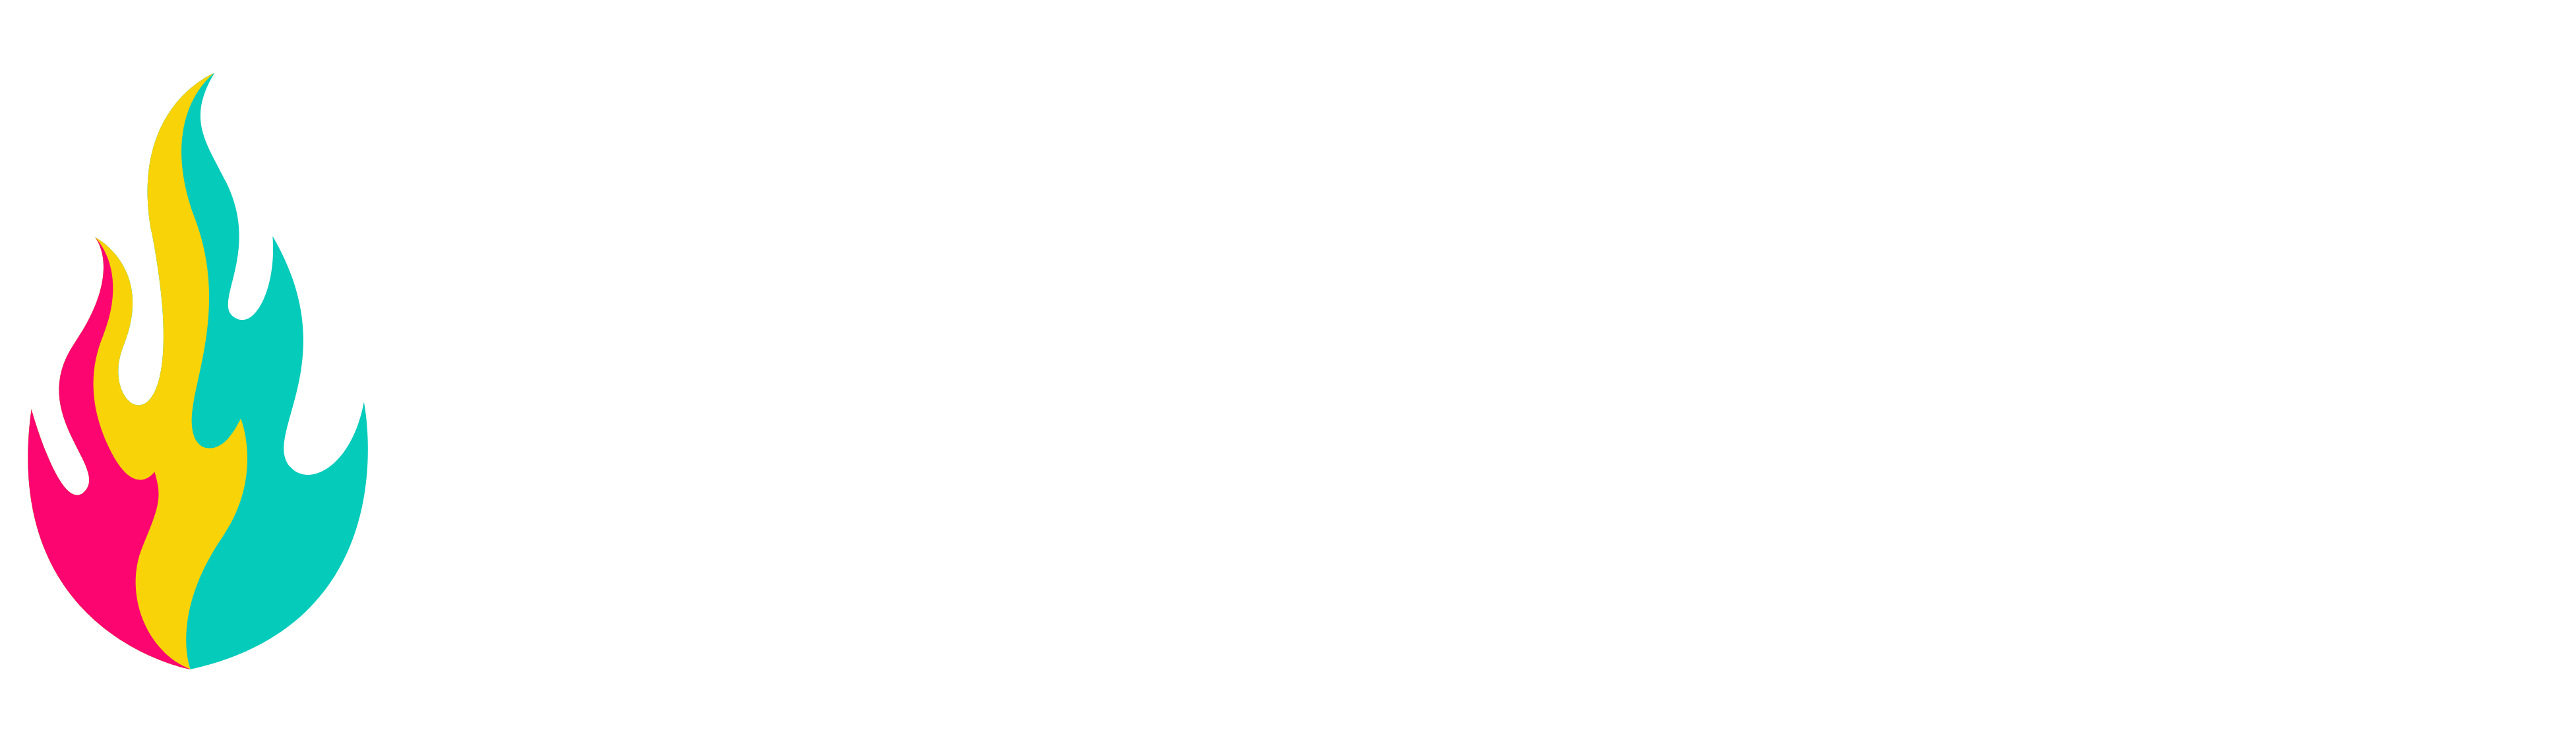 hype house ventures digital marketing agency